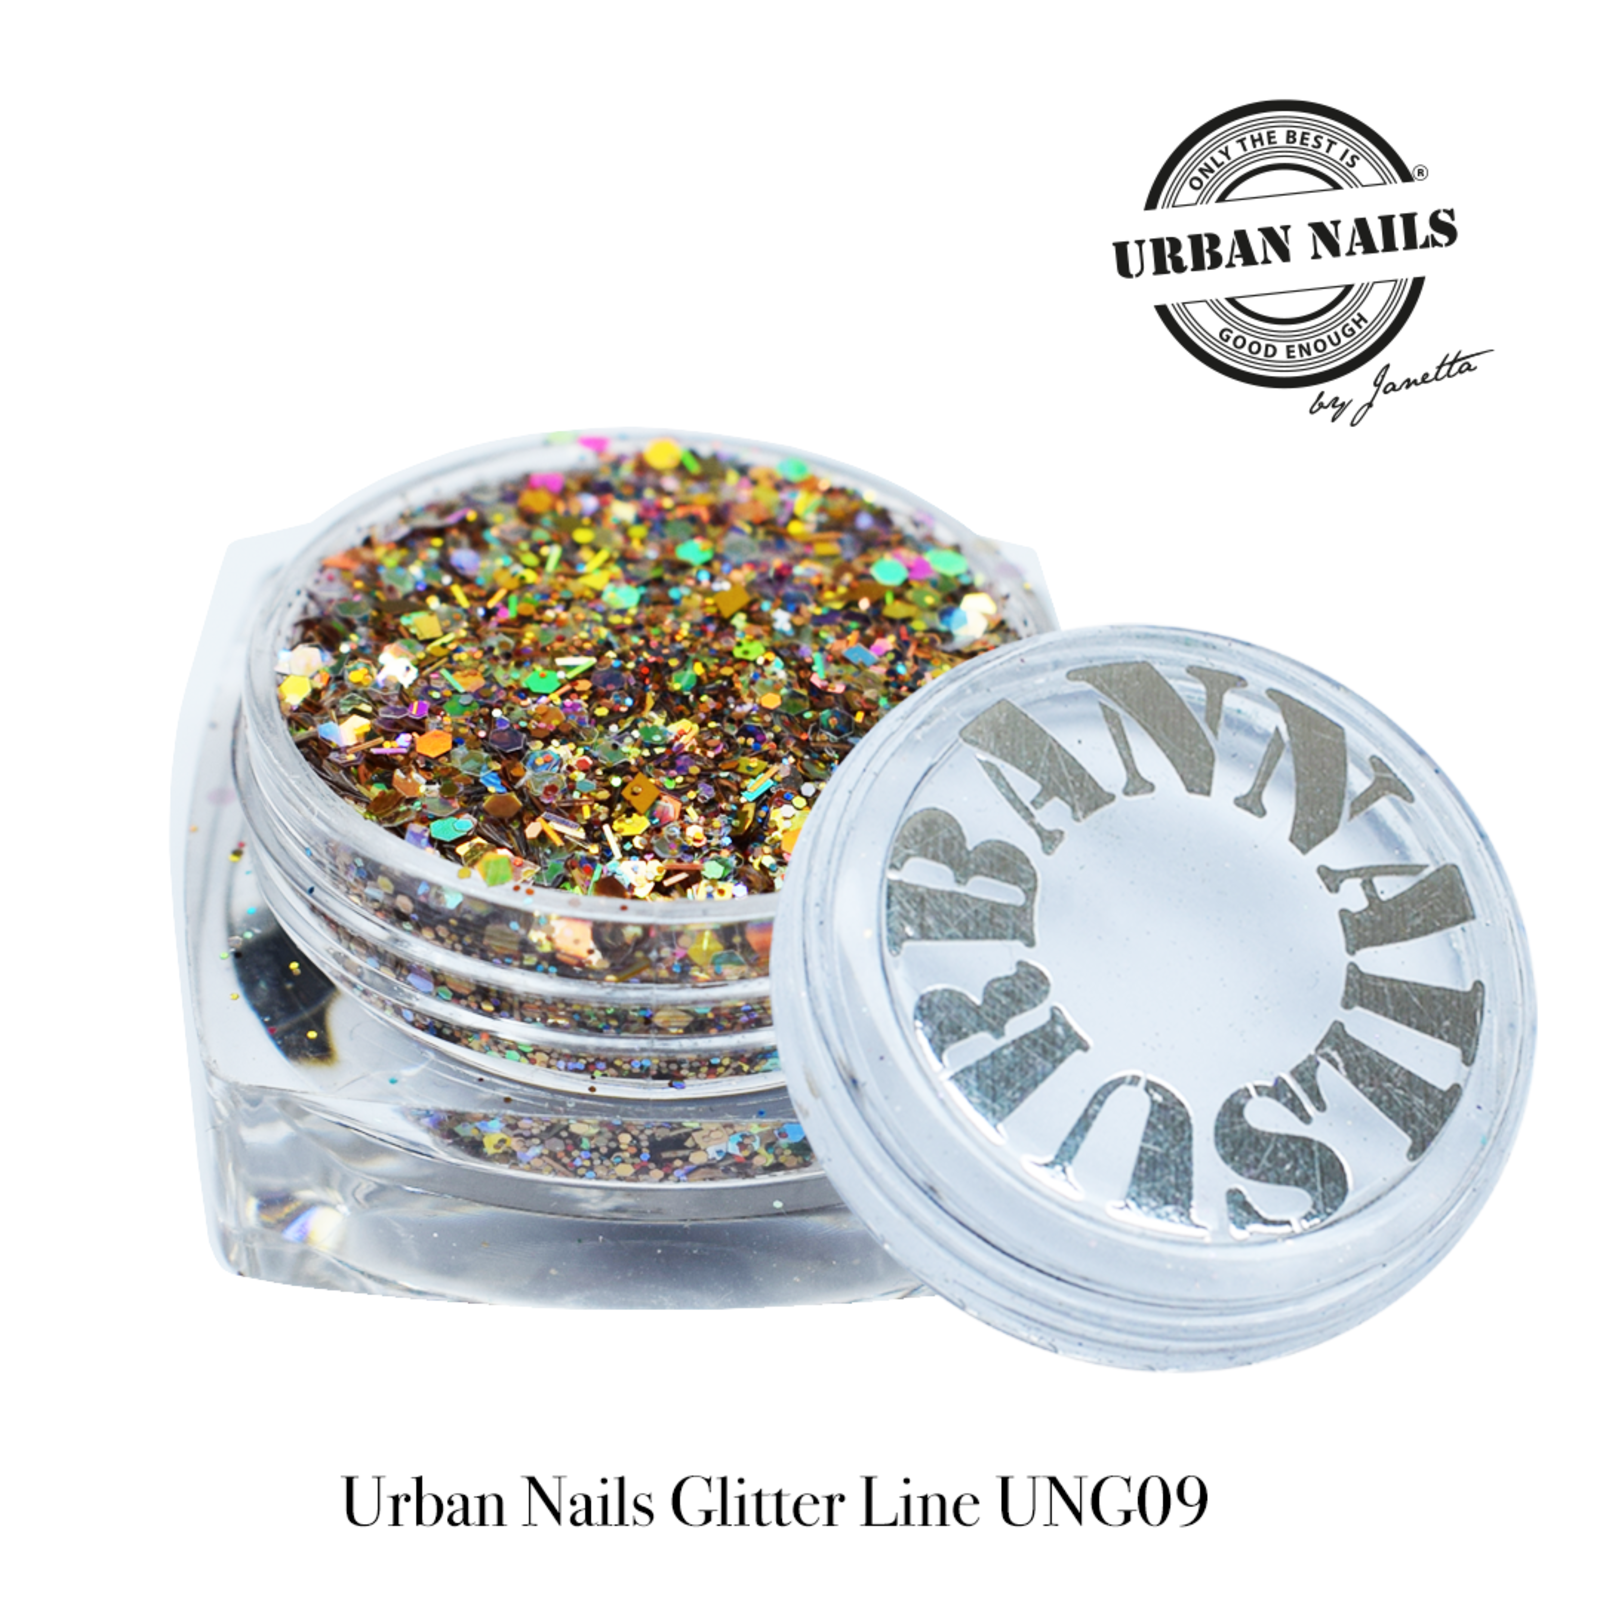 Urban nails Glitter Line UNG9